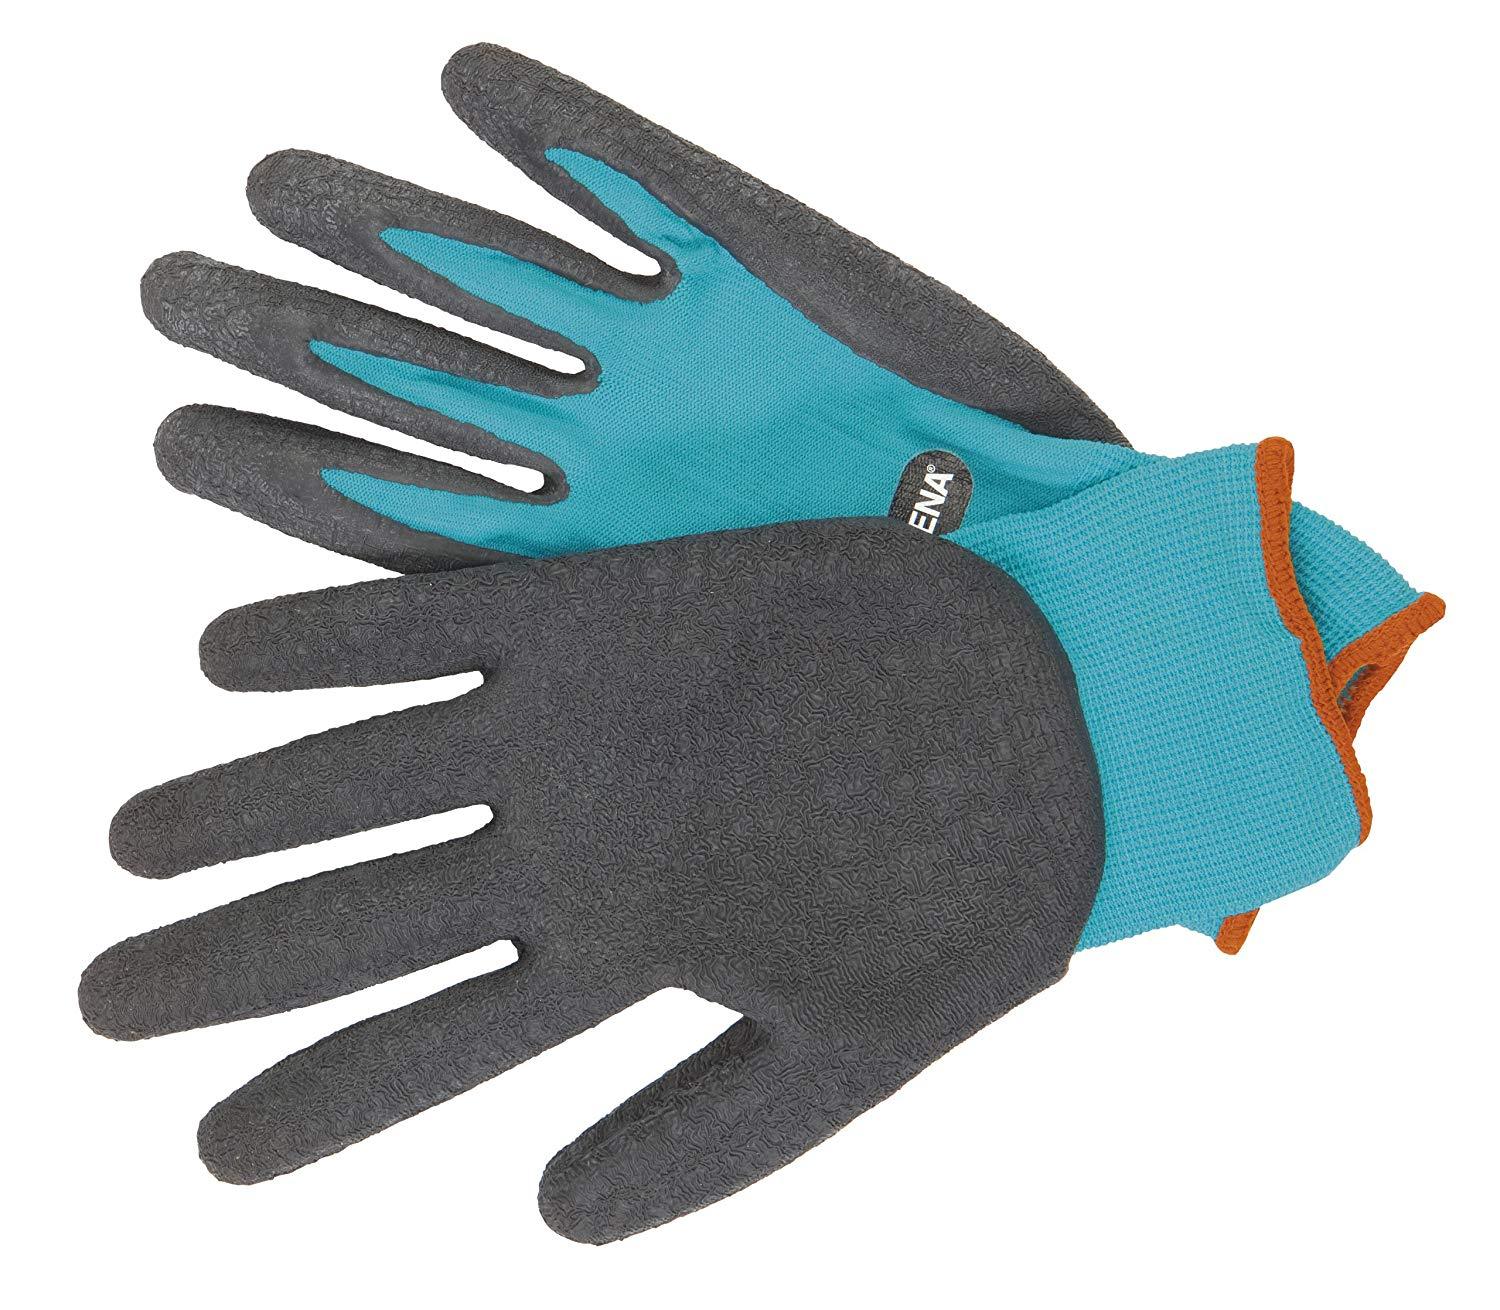 Gardena G-206 Planting & Soil Gloves Size 8/Medium